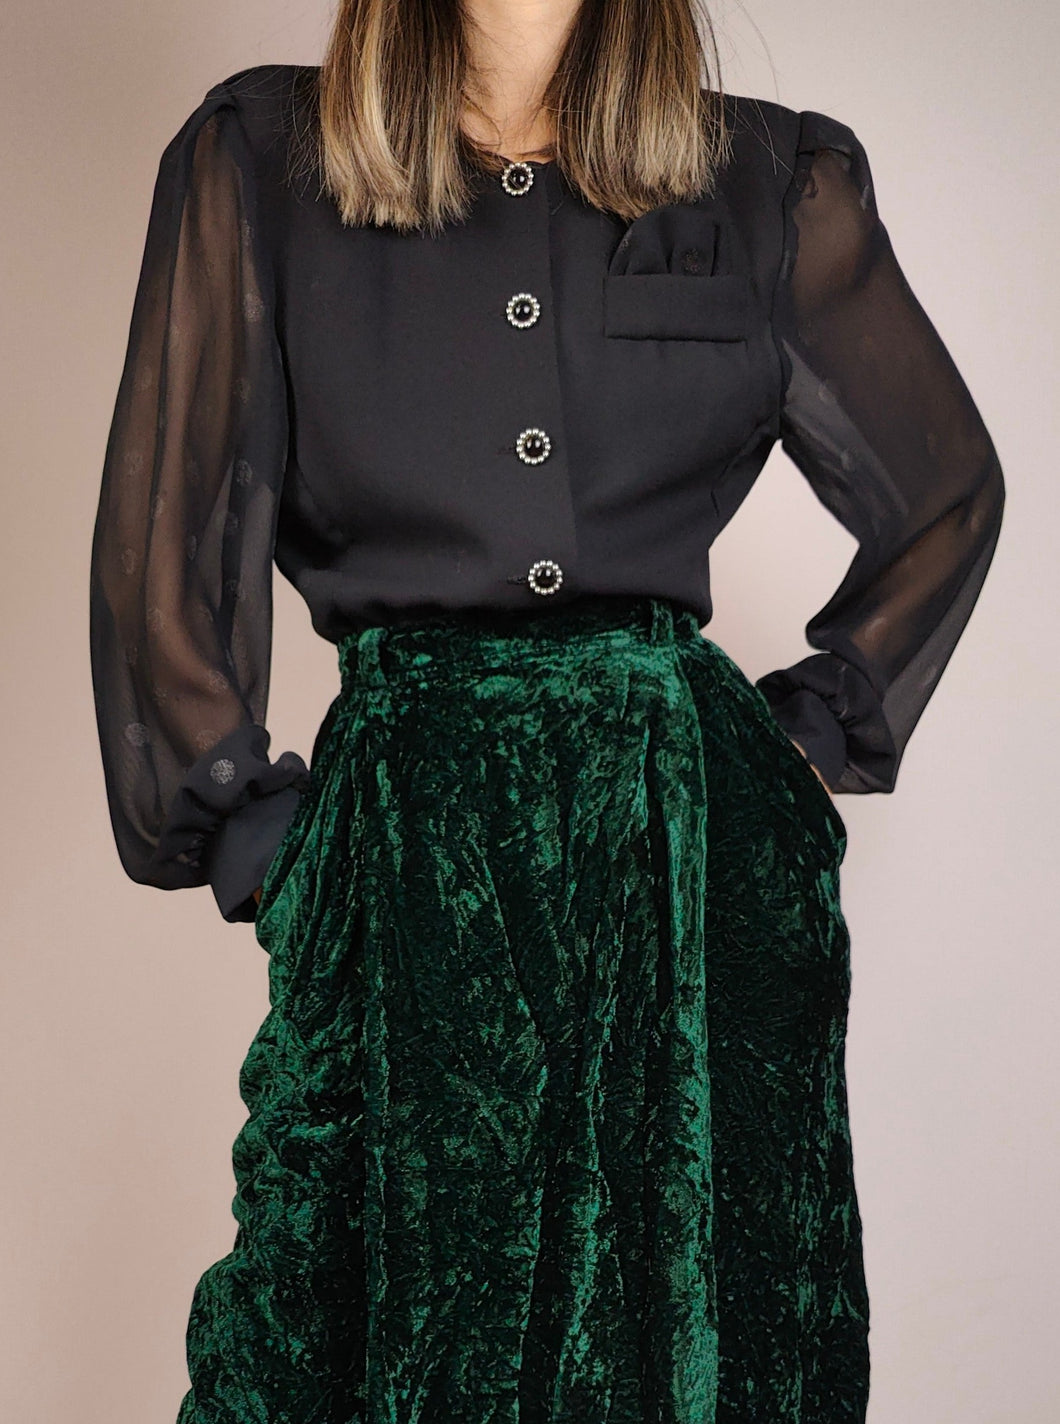 The Black Polka Sleeve Blouse | Vintage 80s black sheer polka dot blouse blazer jacket S